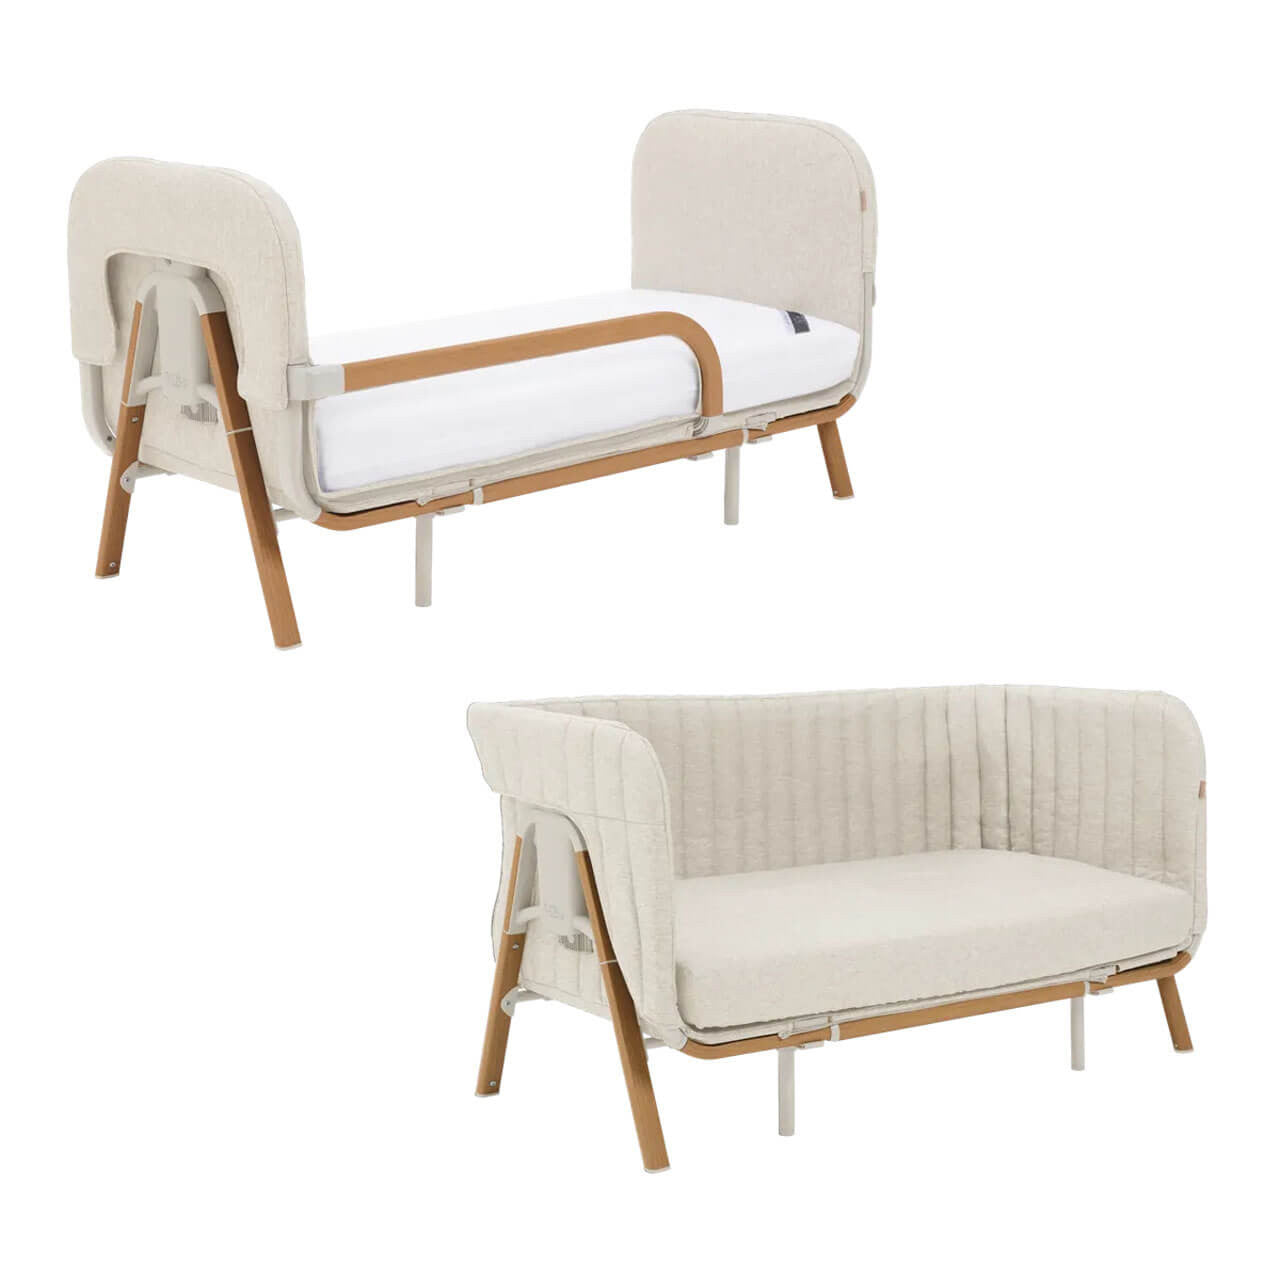 Tutti Bambini Cozee XL Junior Bed & Sofa Expansion Pack - Scandinavian Walnut/Ecru - For Your Little One